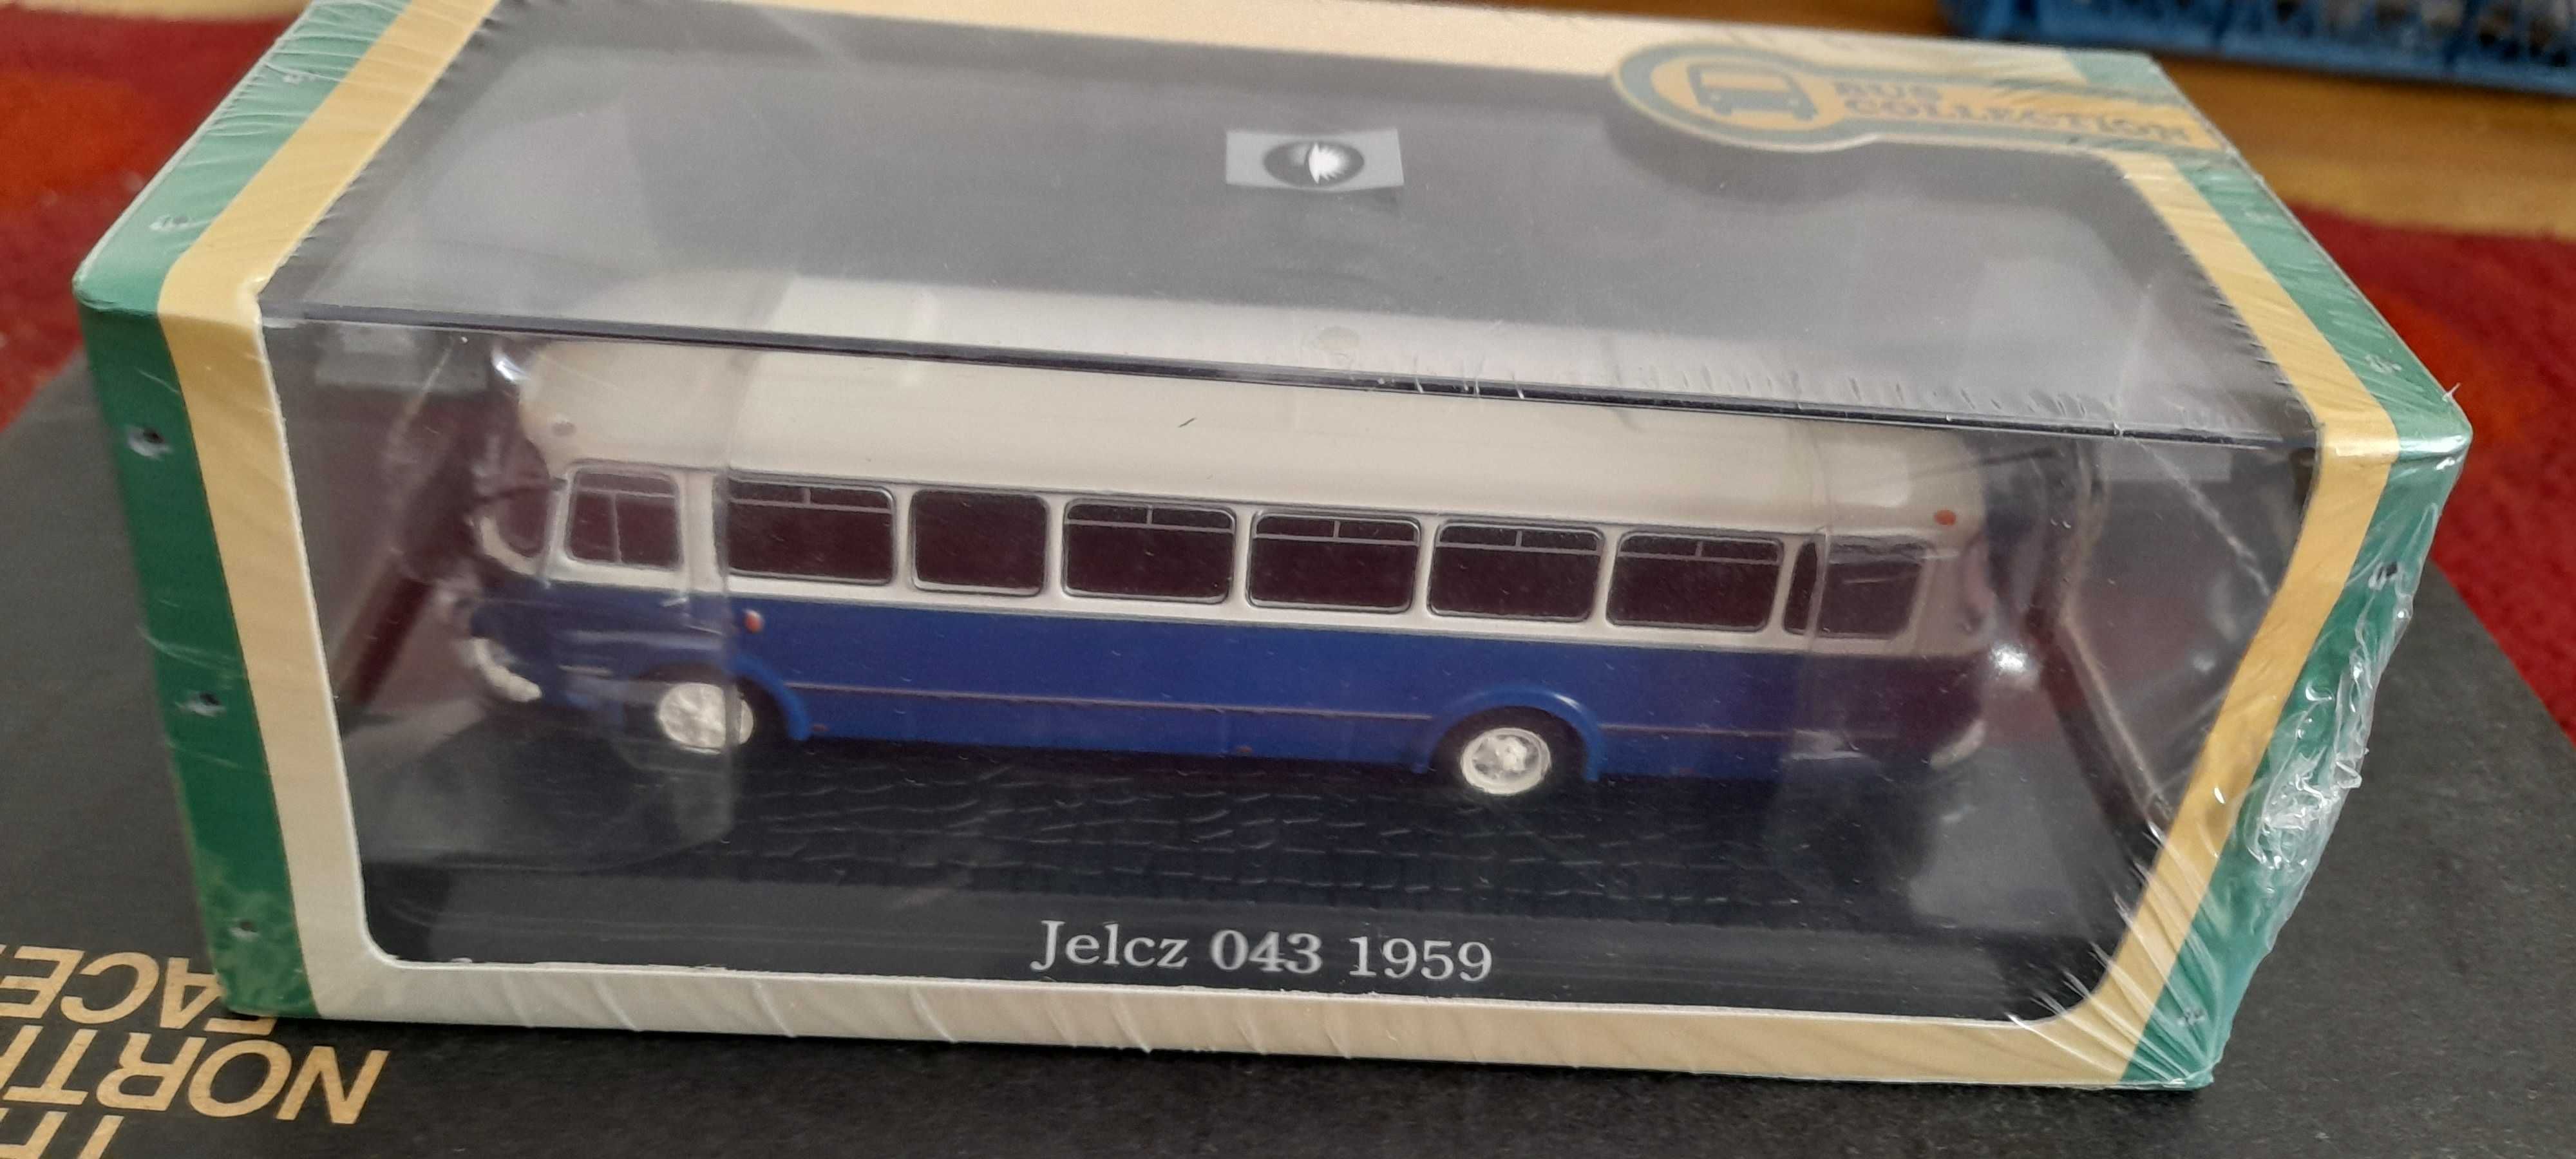 Autobus Jelcz 043 Kultowe Autobusy PRL/ Kultowe Auta PRL